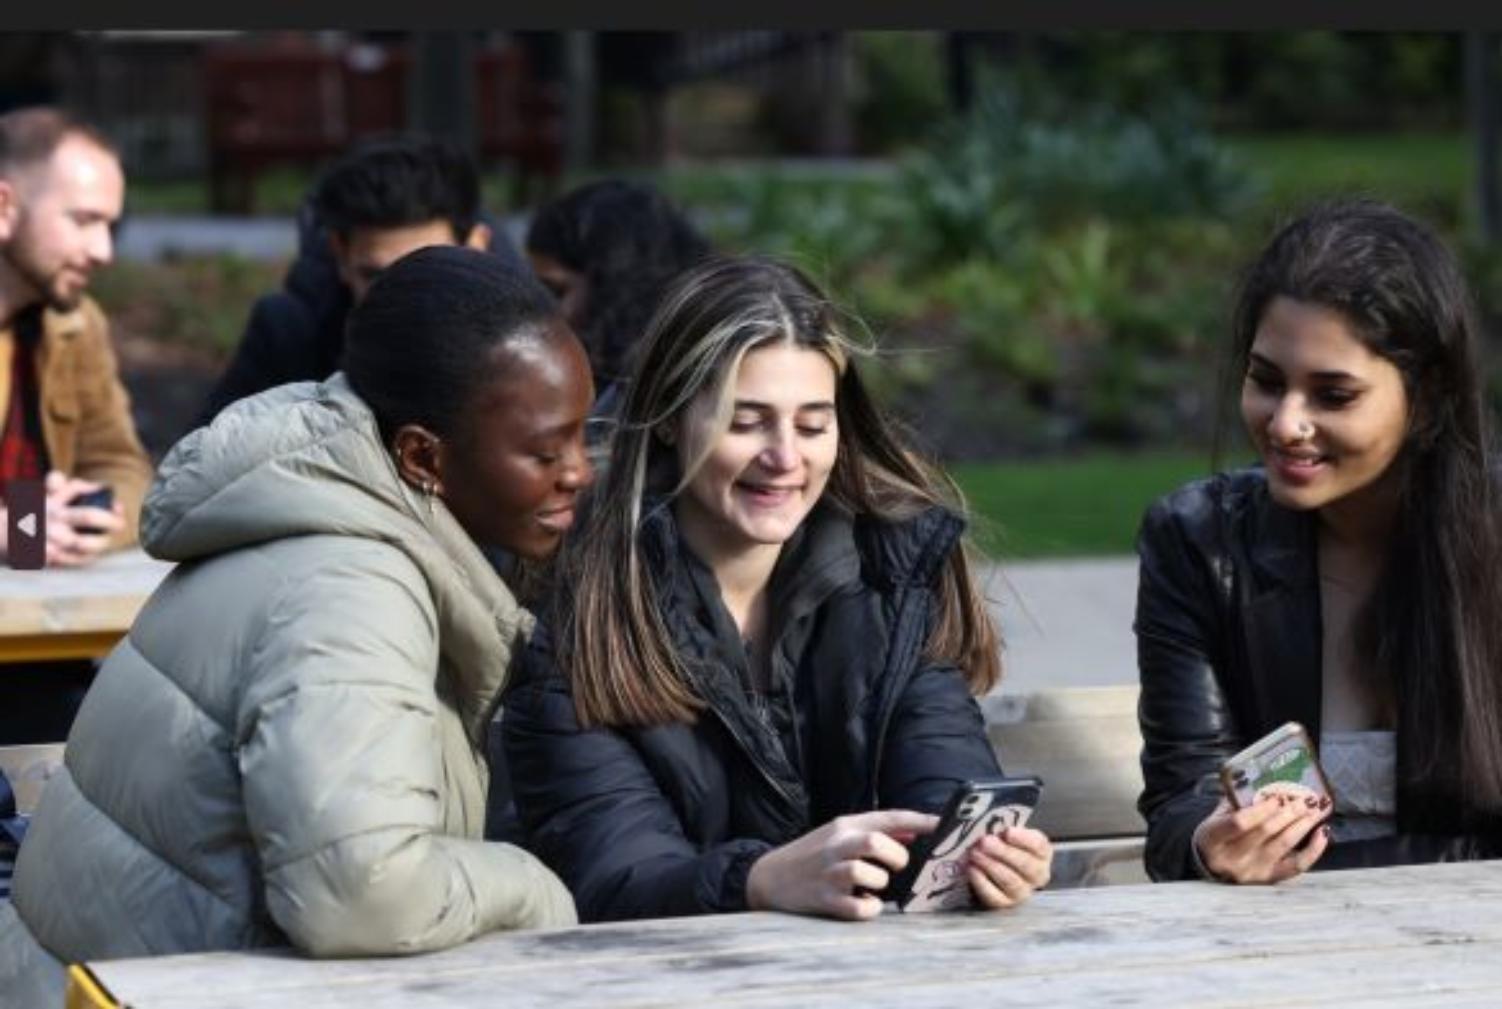 Students looking at phones